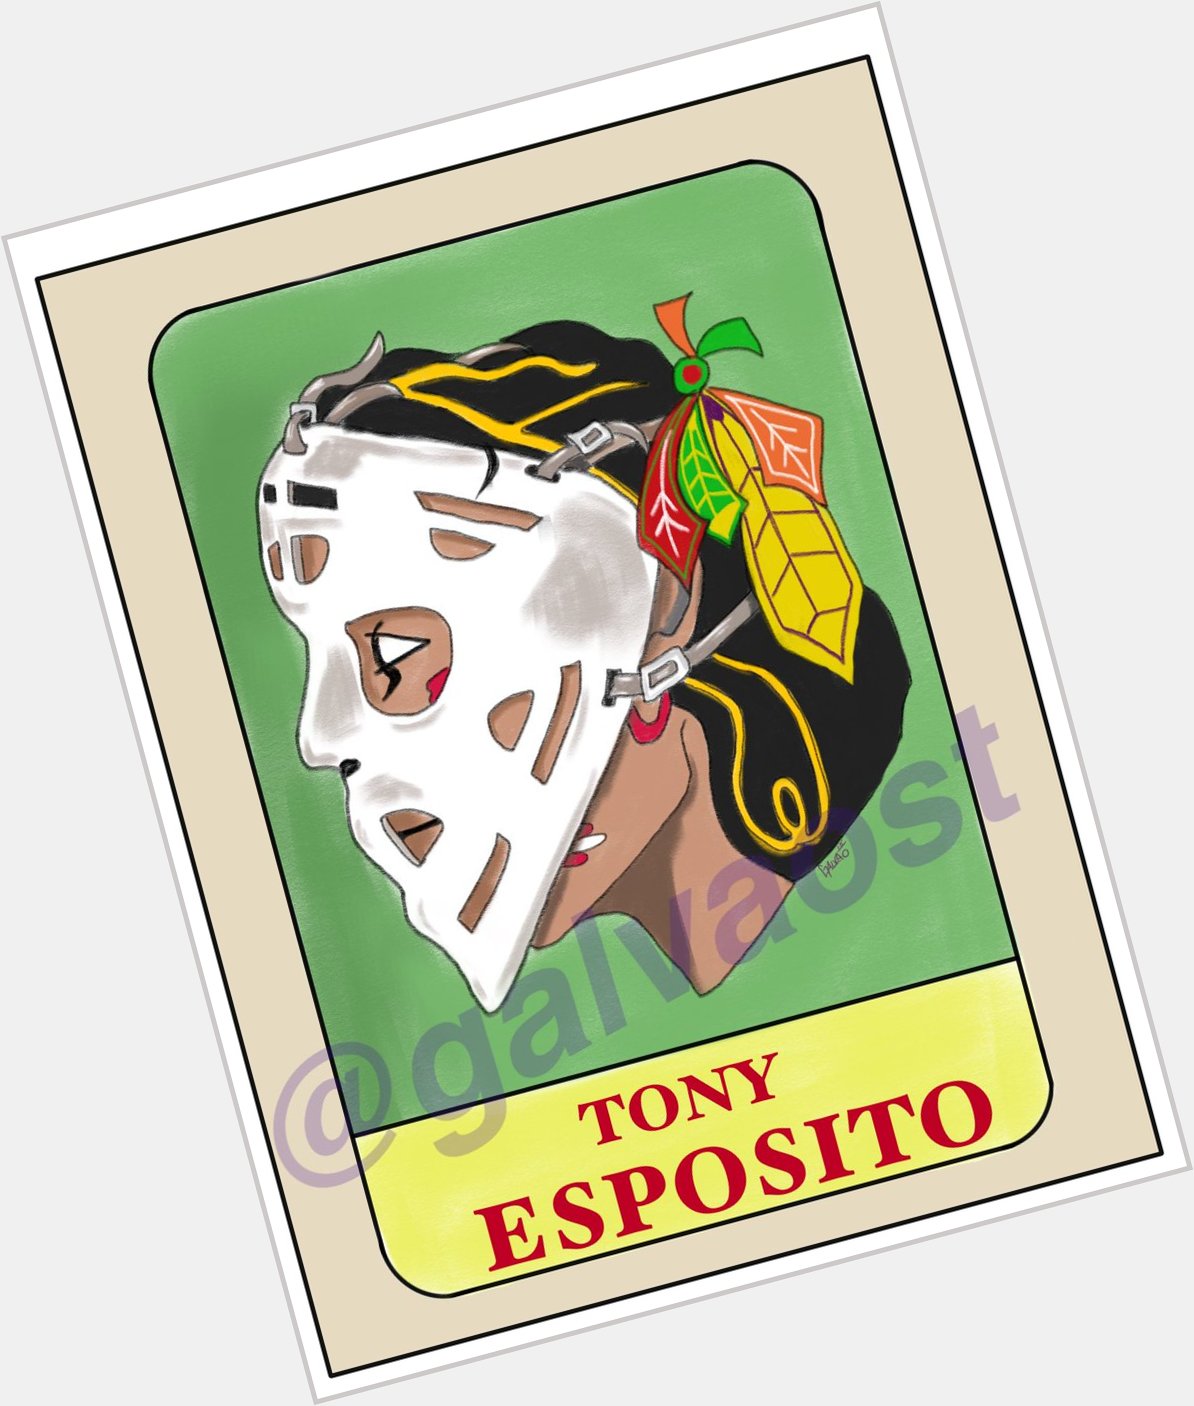 Happy birthday to goalie and iconic goaltender Tony Esposito! 